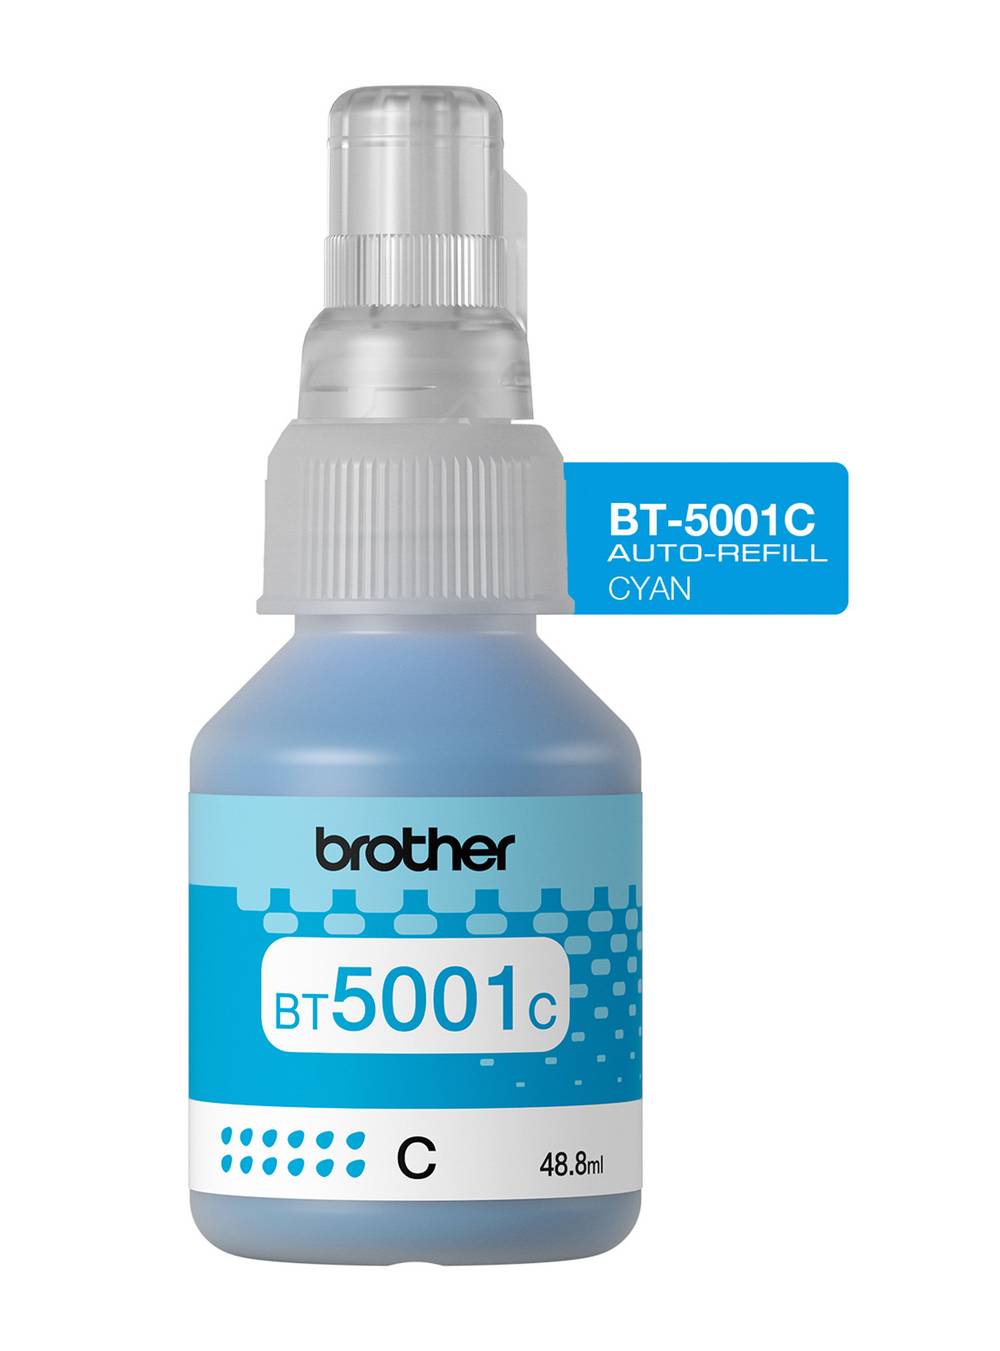 Brother botella tinta 5001 cyan (41.8 ml)